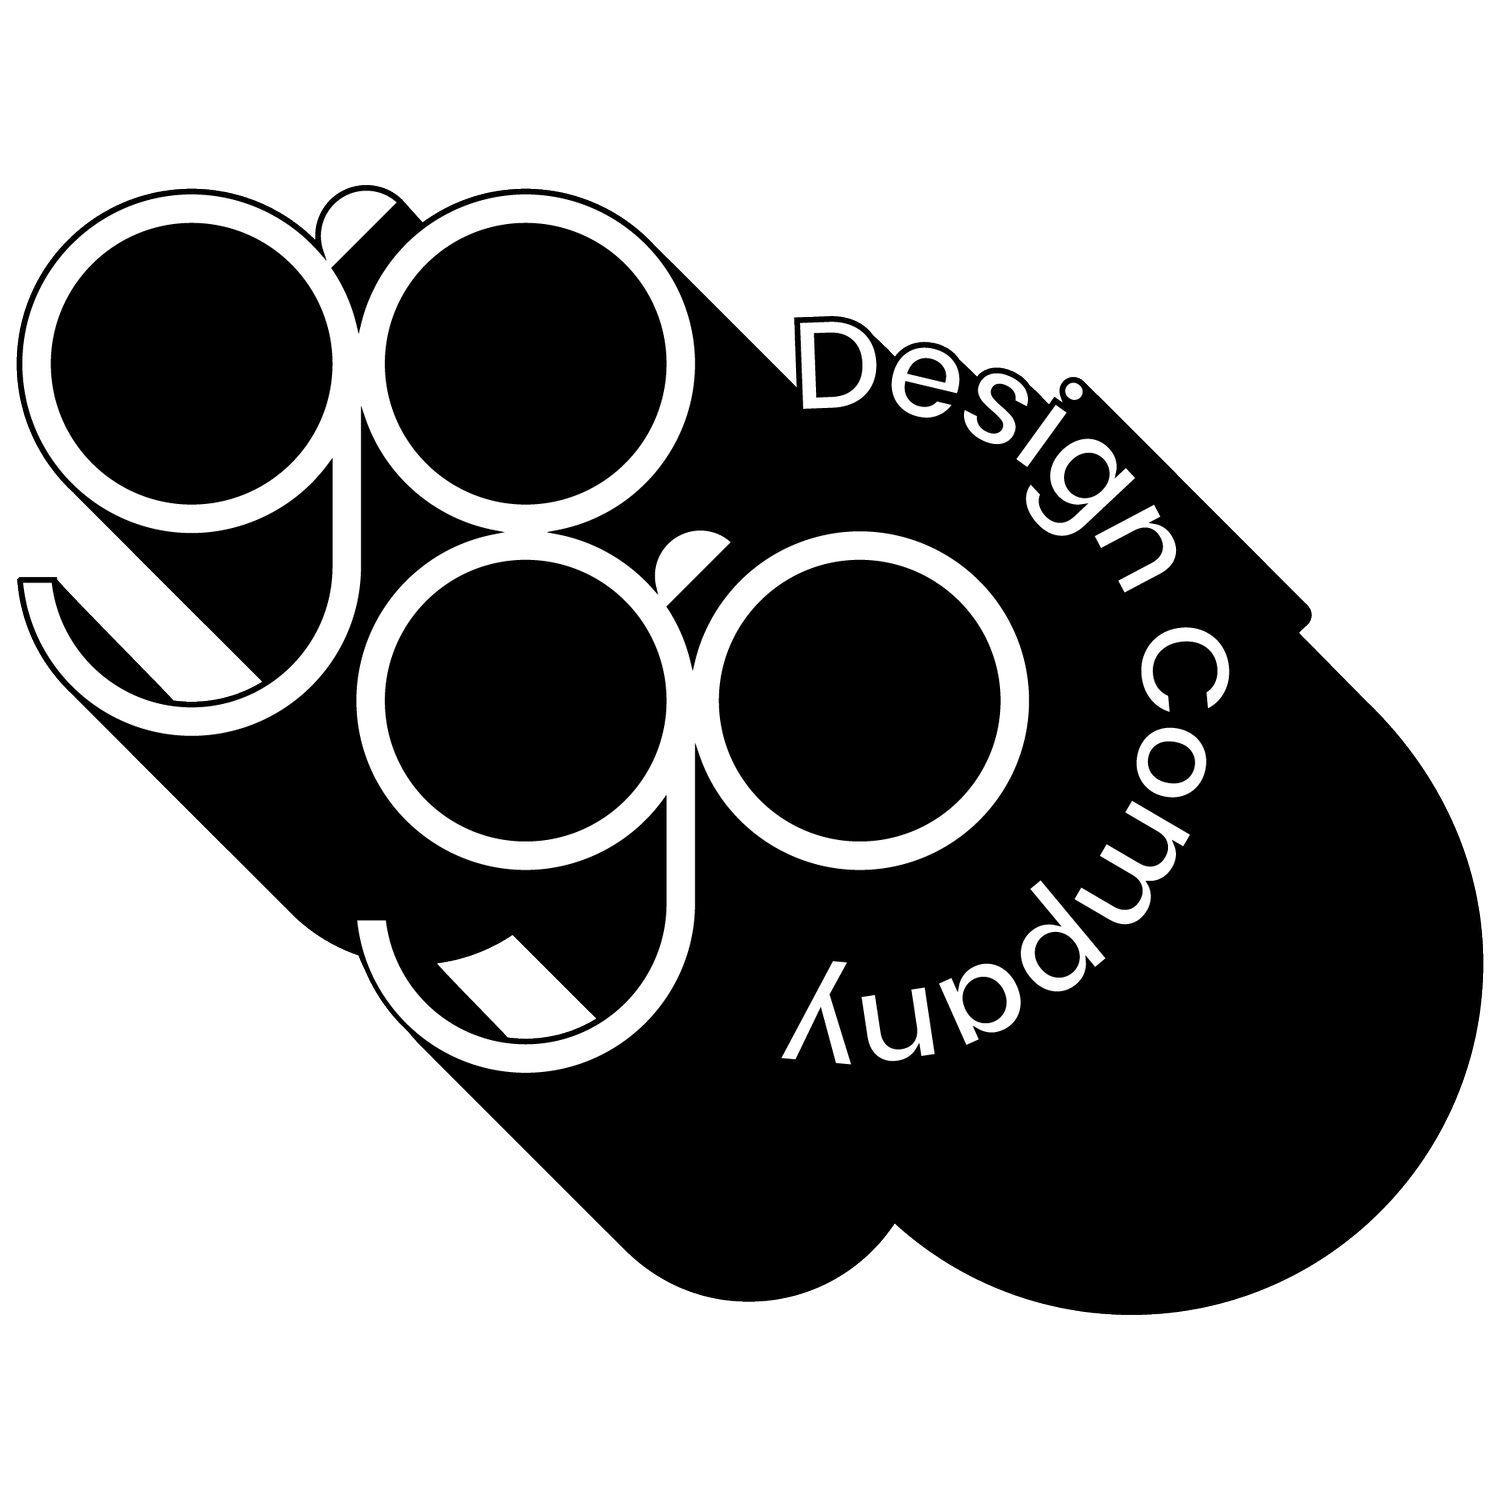 Go Go Design Co.